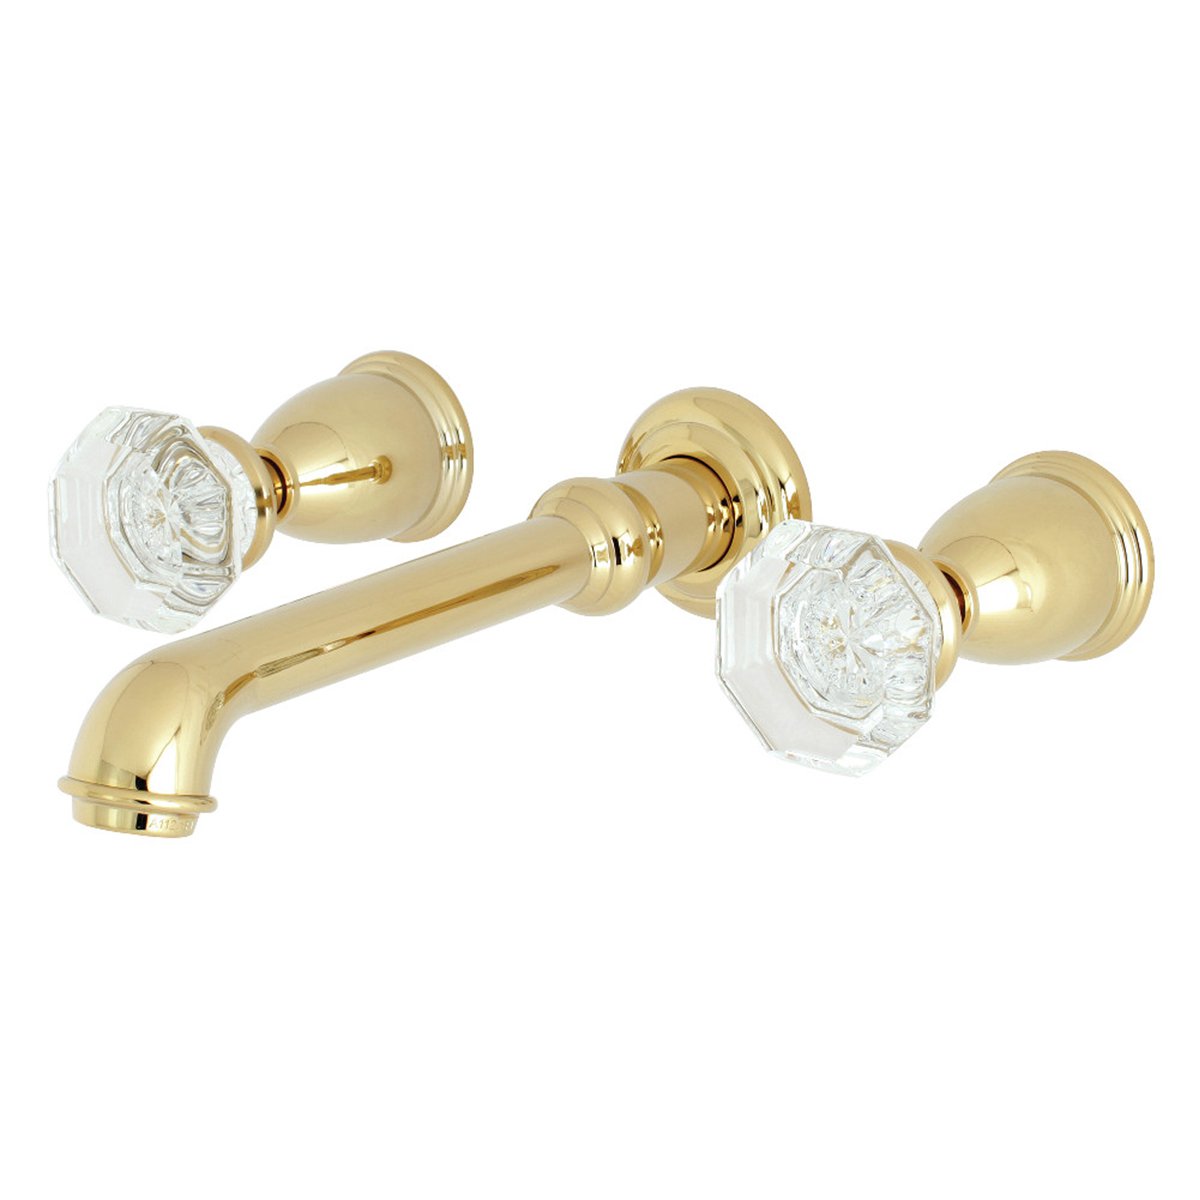 Kingston Brass Celebrity Two-Handle Wall Mount Bathroom Faucet